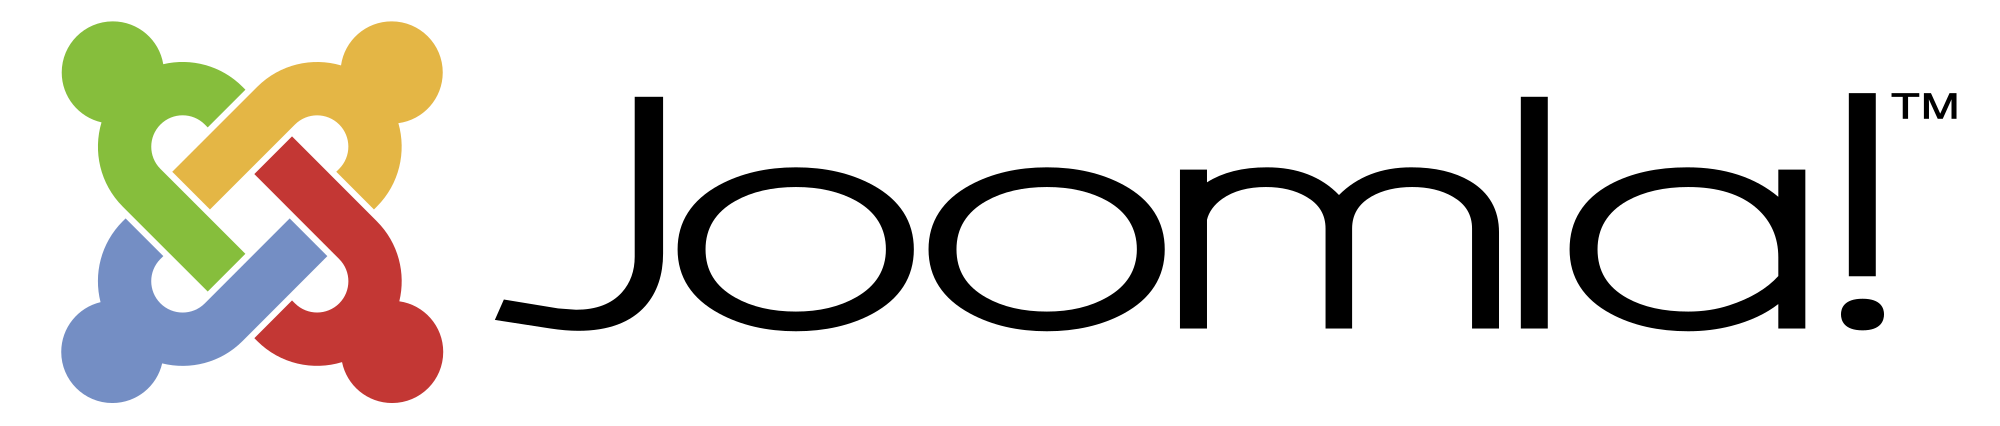 Joomla flat icon Transparent 